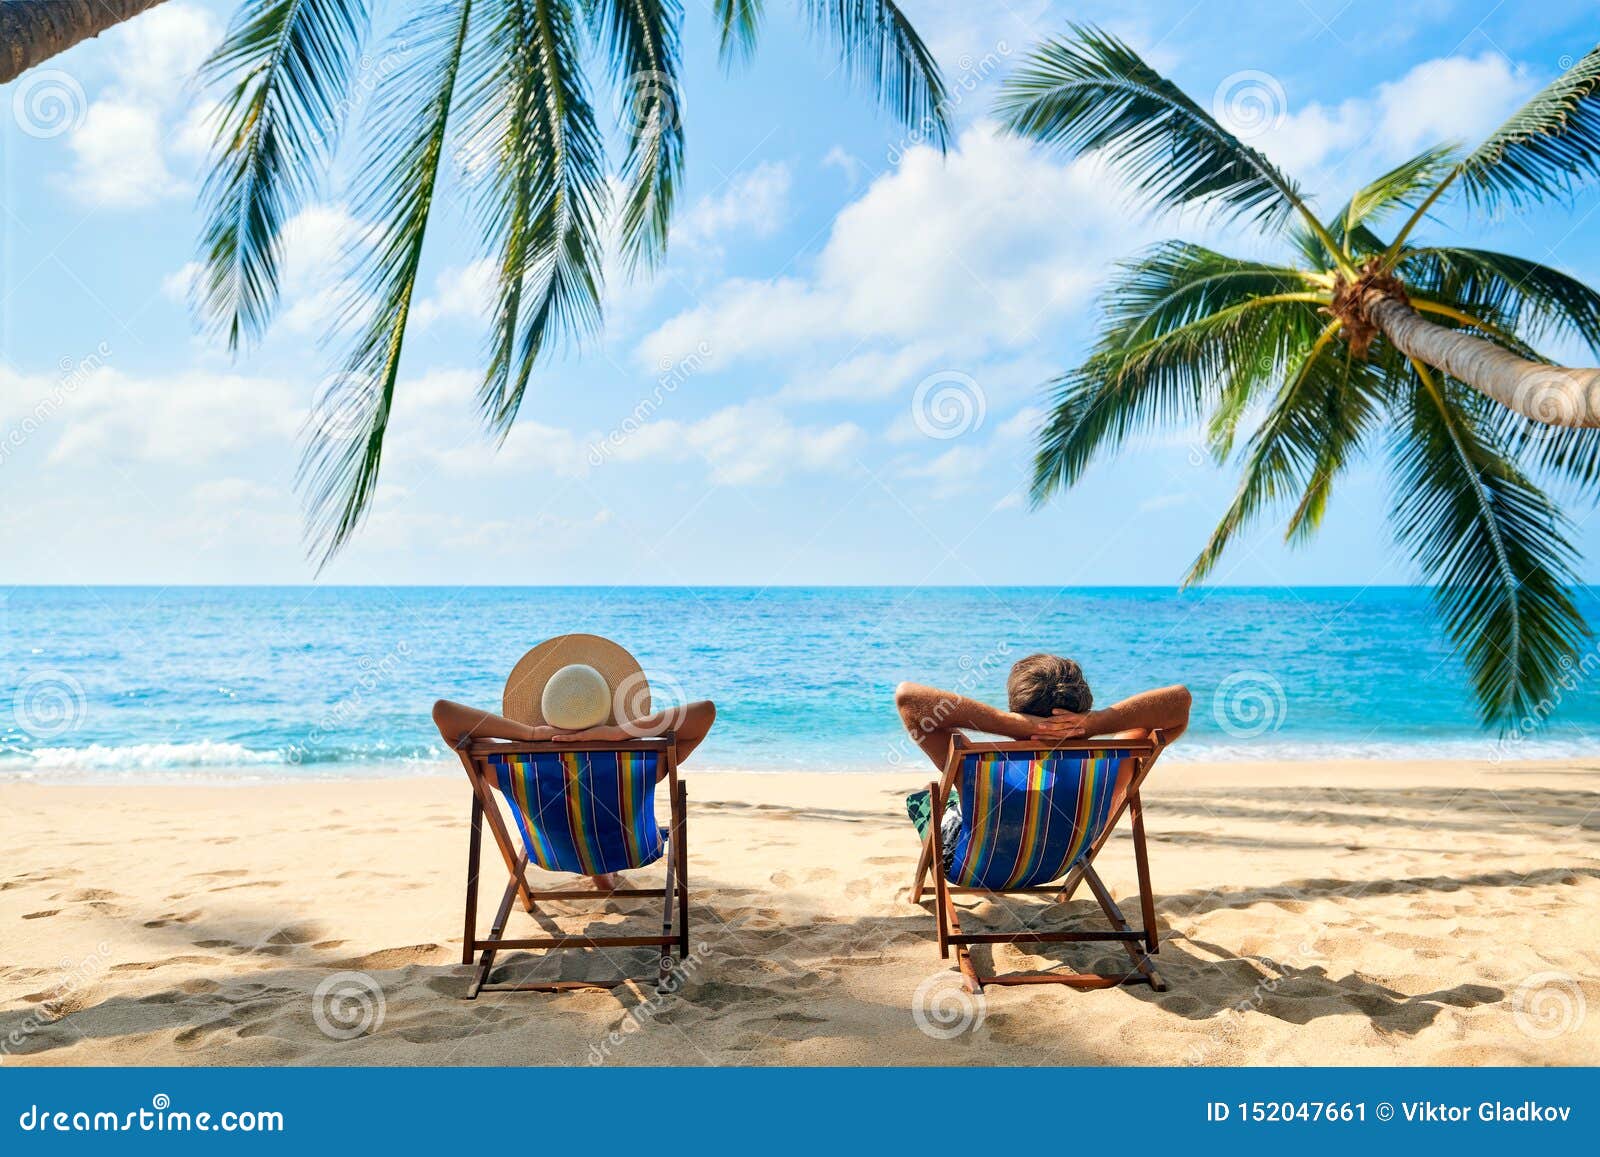 Couple Relax On The Beach Enjoy Beautiful Sea On The Tropical Island